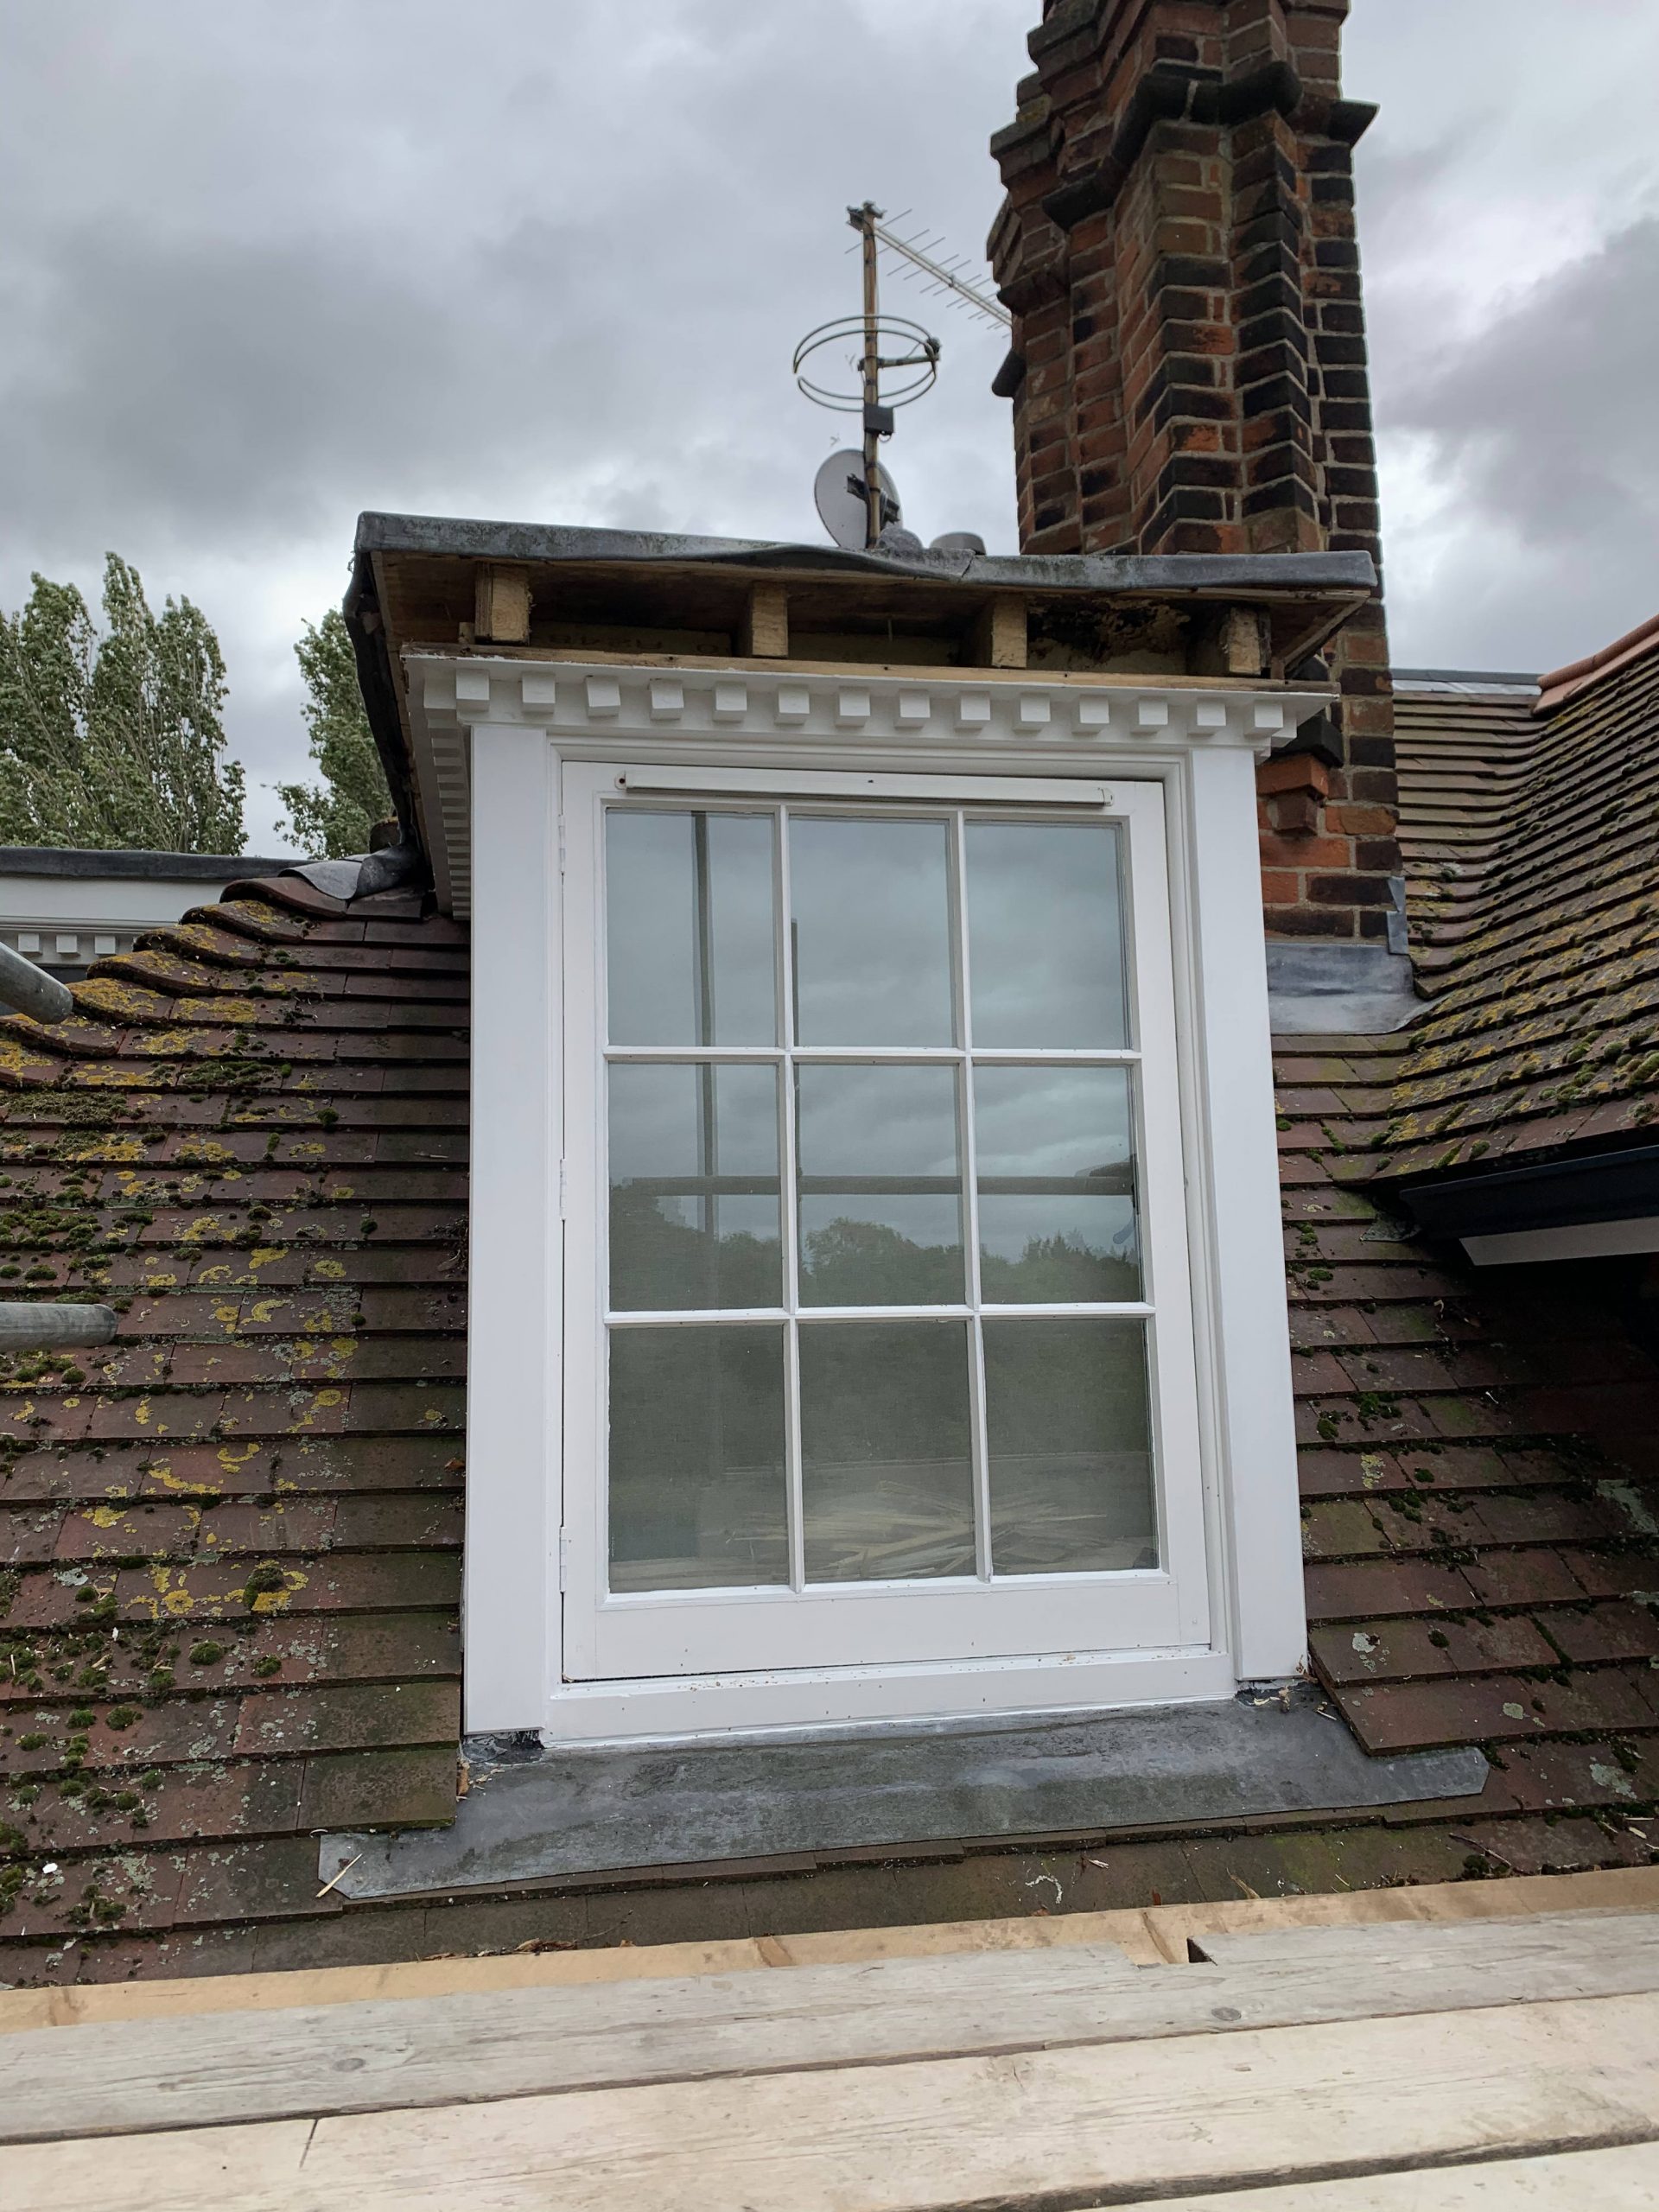 Window Restoration